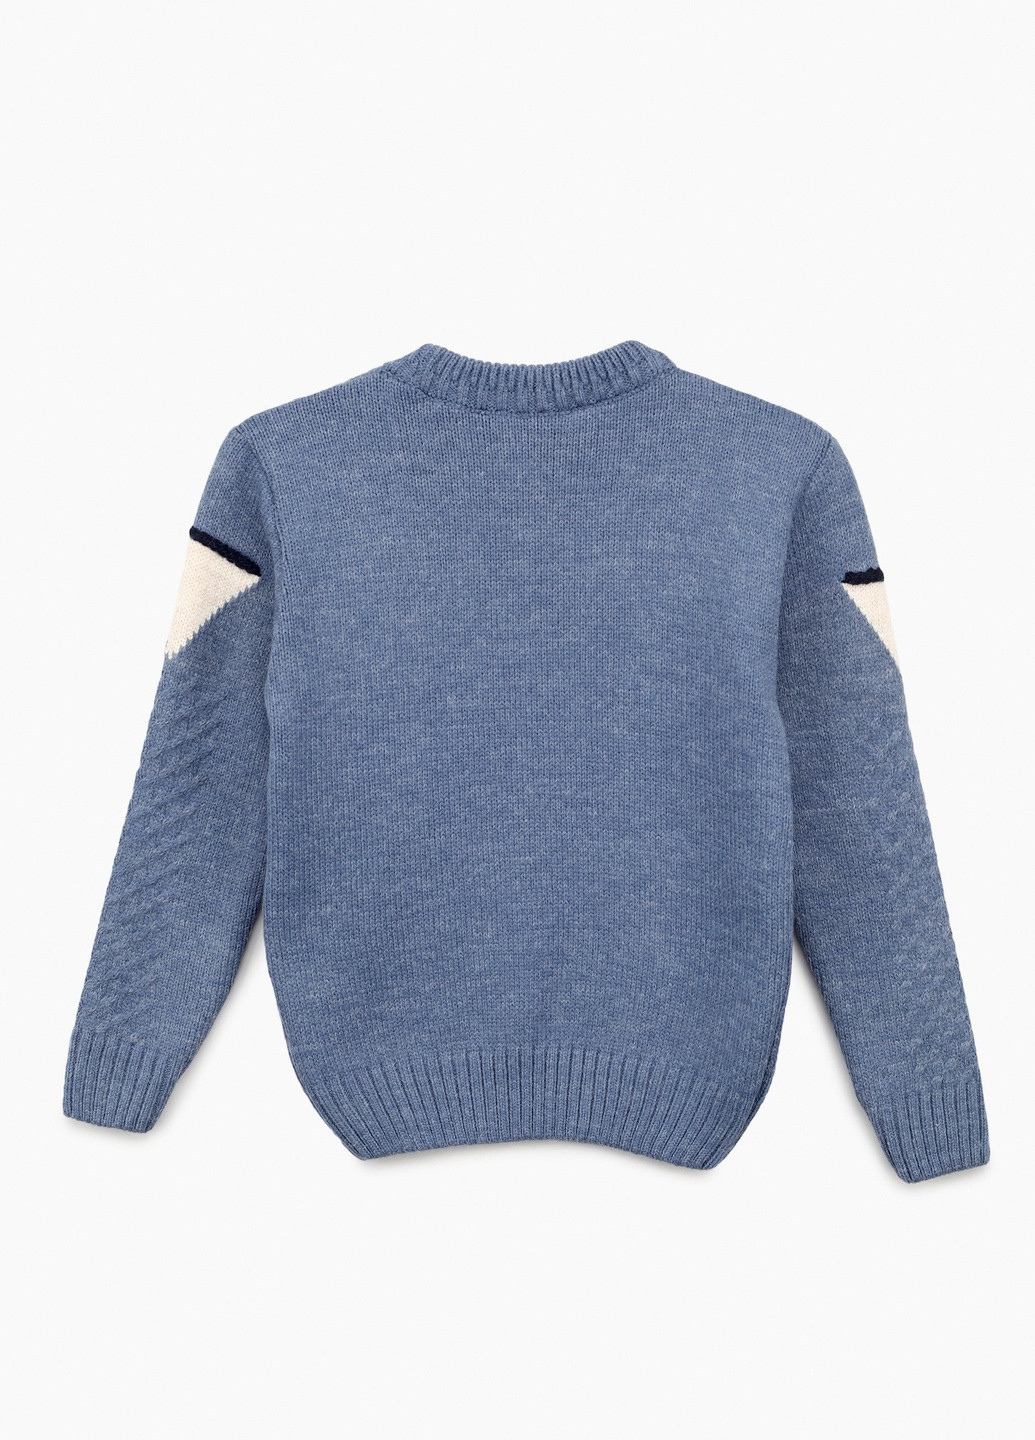 Синий зимний свитер Toontoy